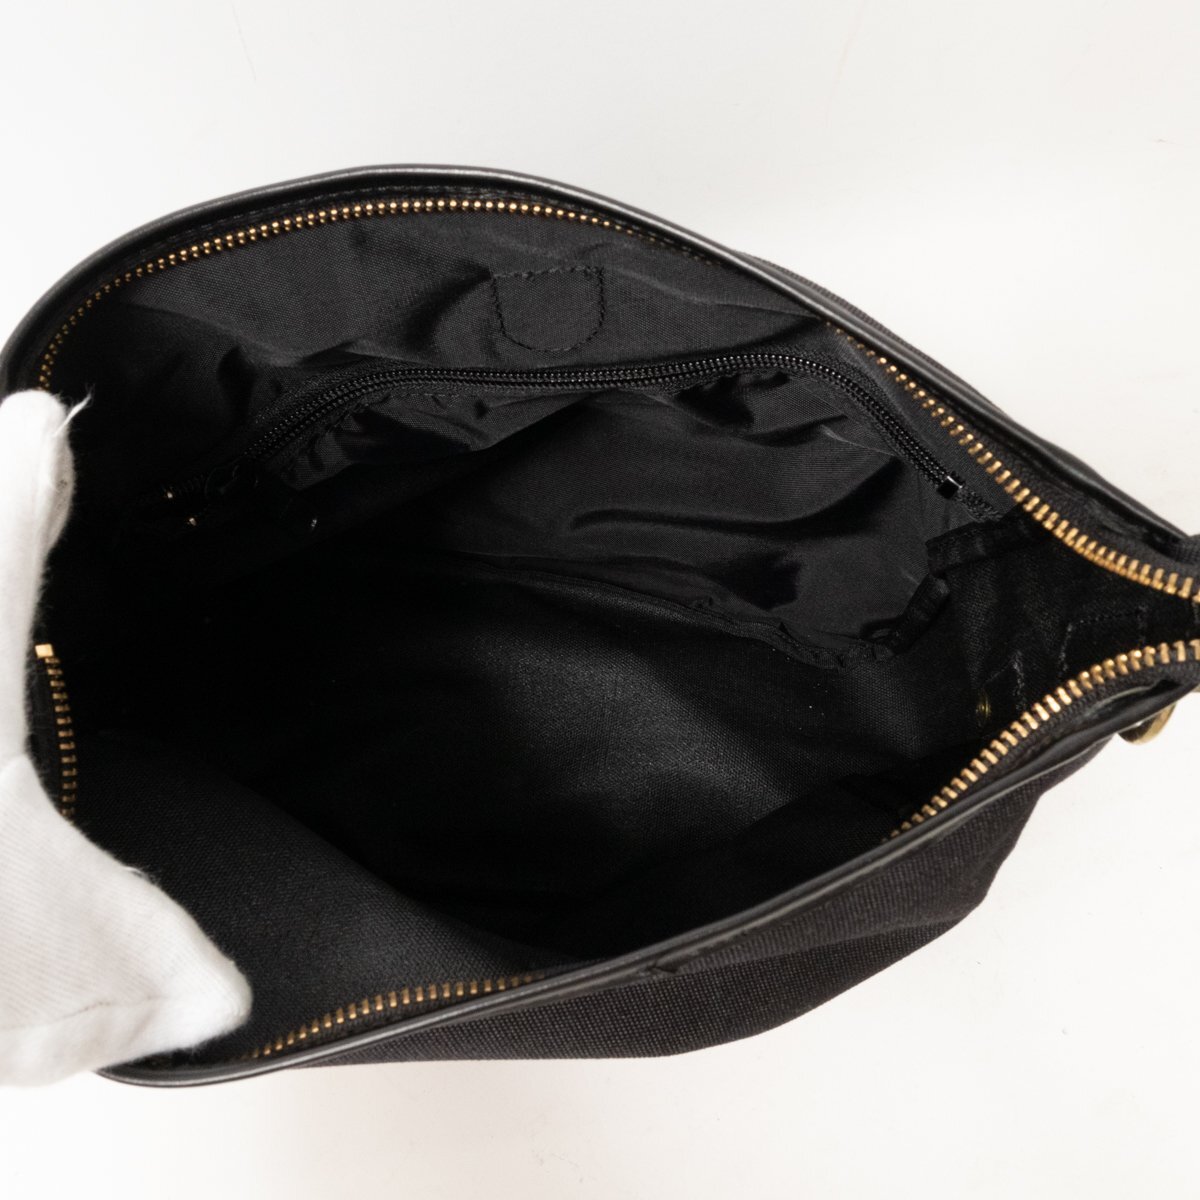 LES TOILES DU SOLEILre*towa-ru*te.* soleil made in Japan stripe rucksack tote bag cotton nylon cow leather black 